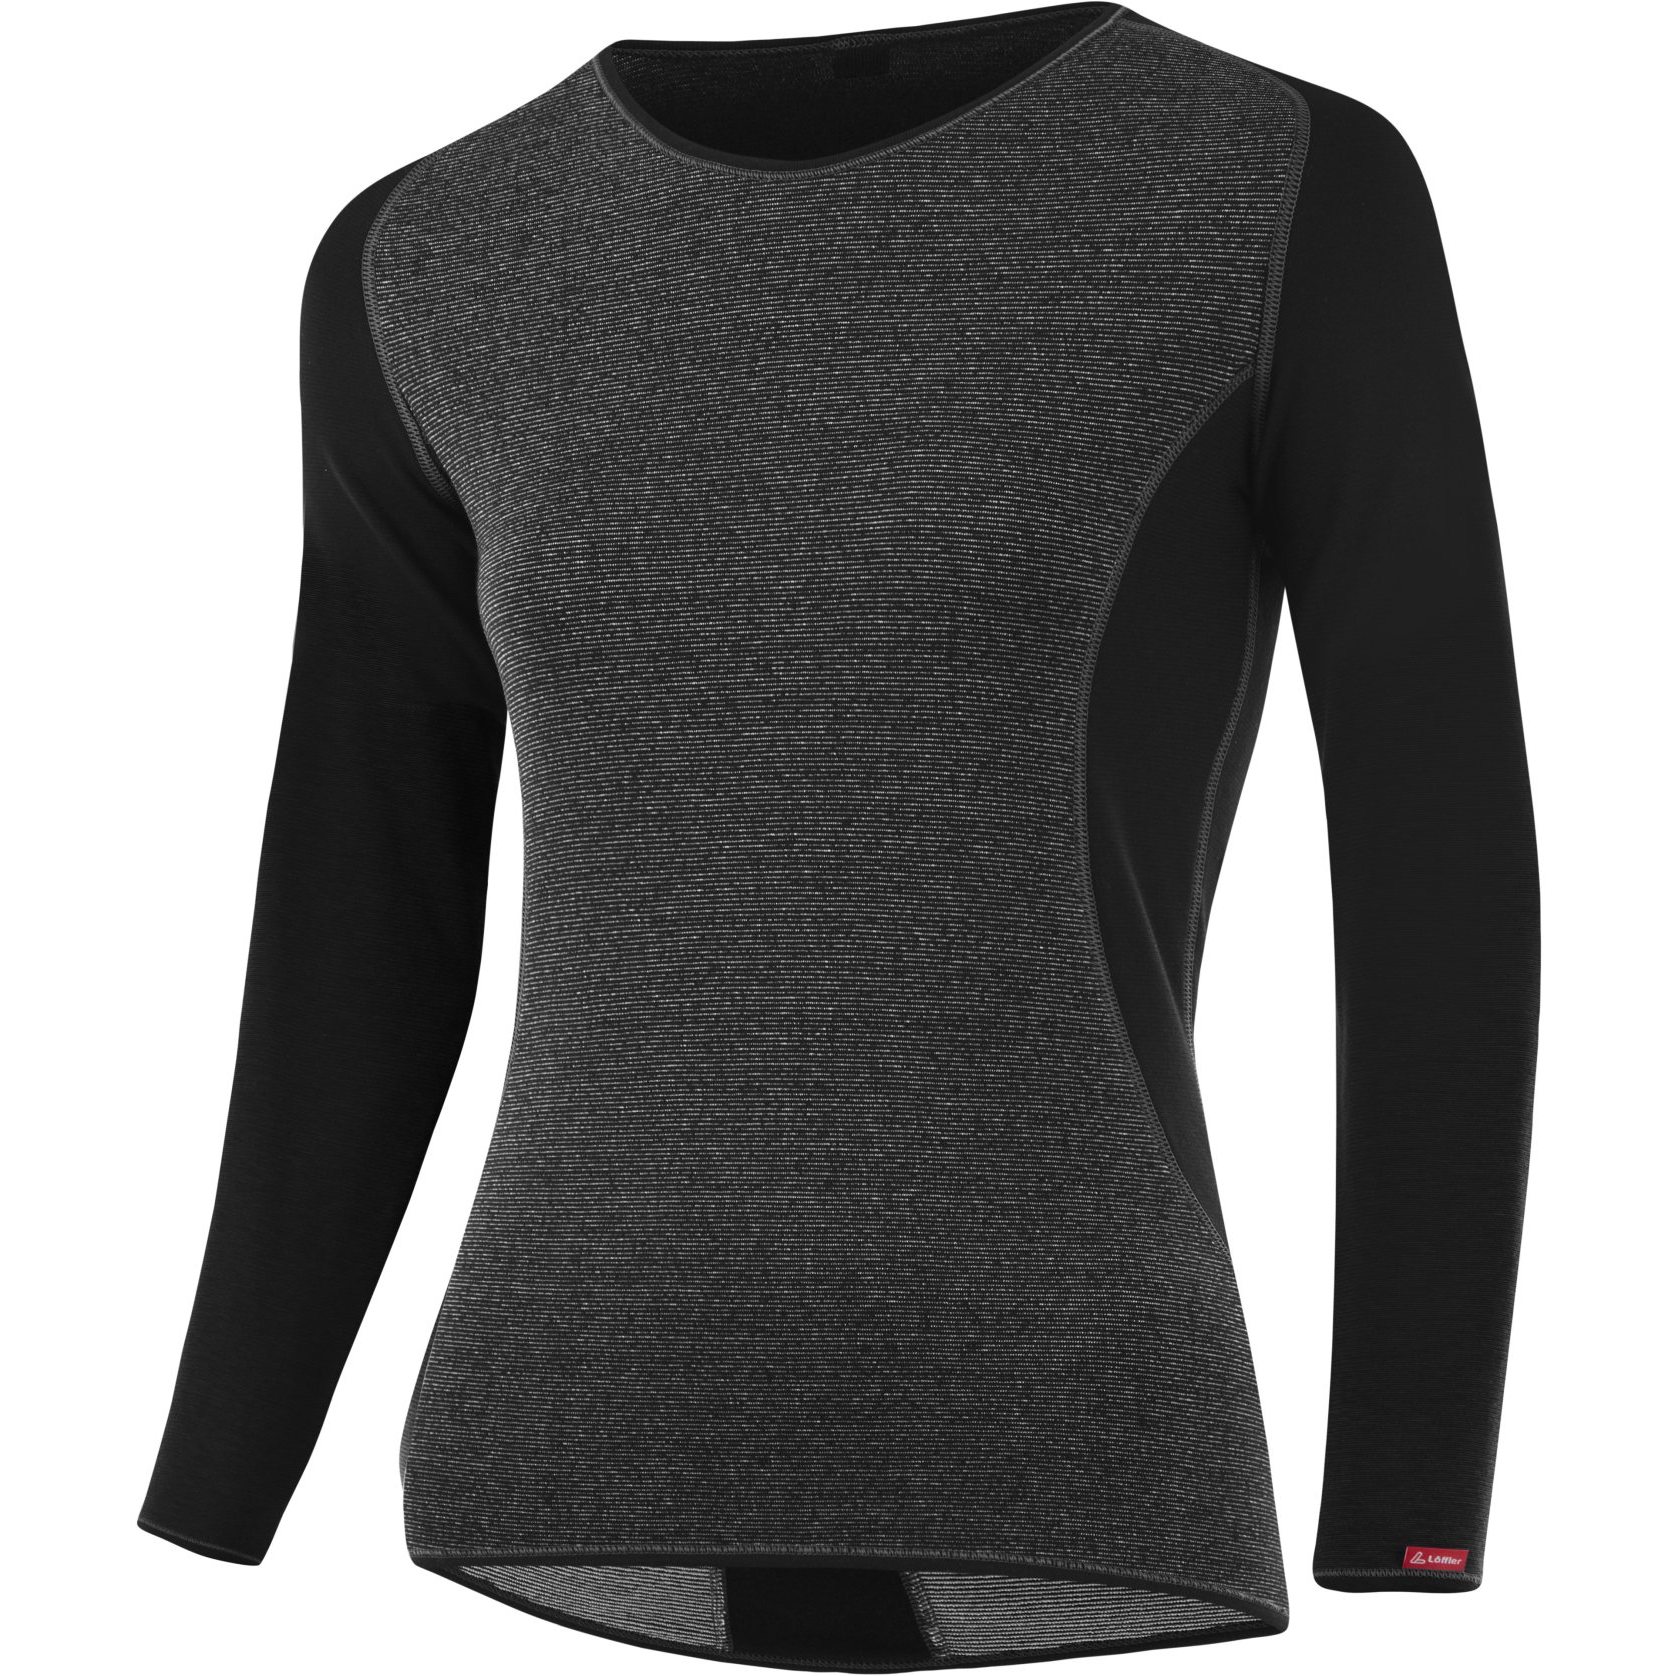 Image of Löffler Transtex Warm CB Women's Shirt Long Sleeve - black 990